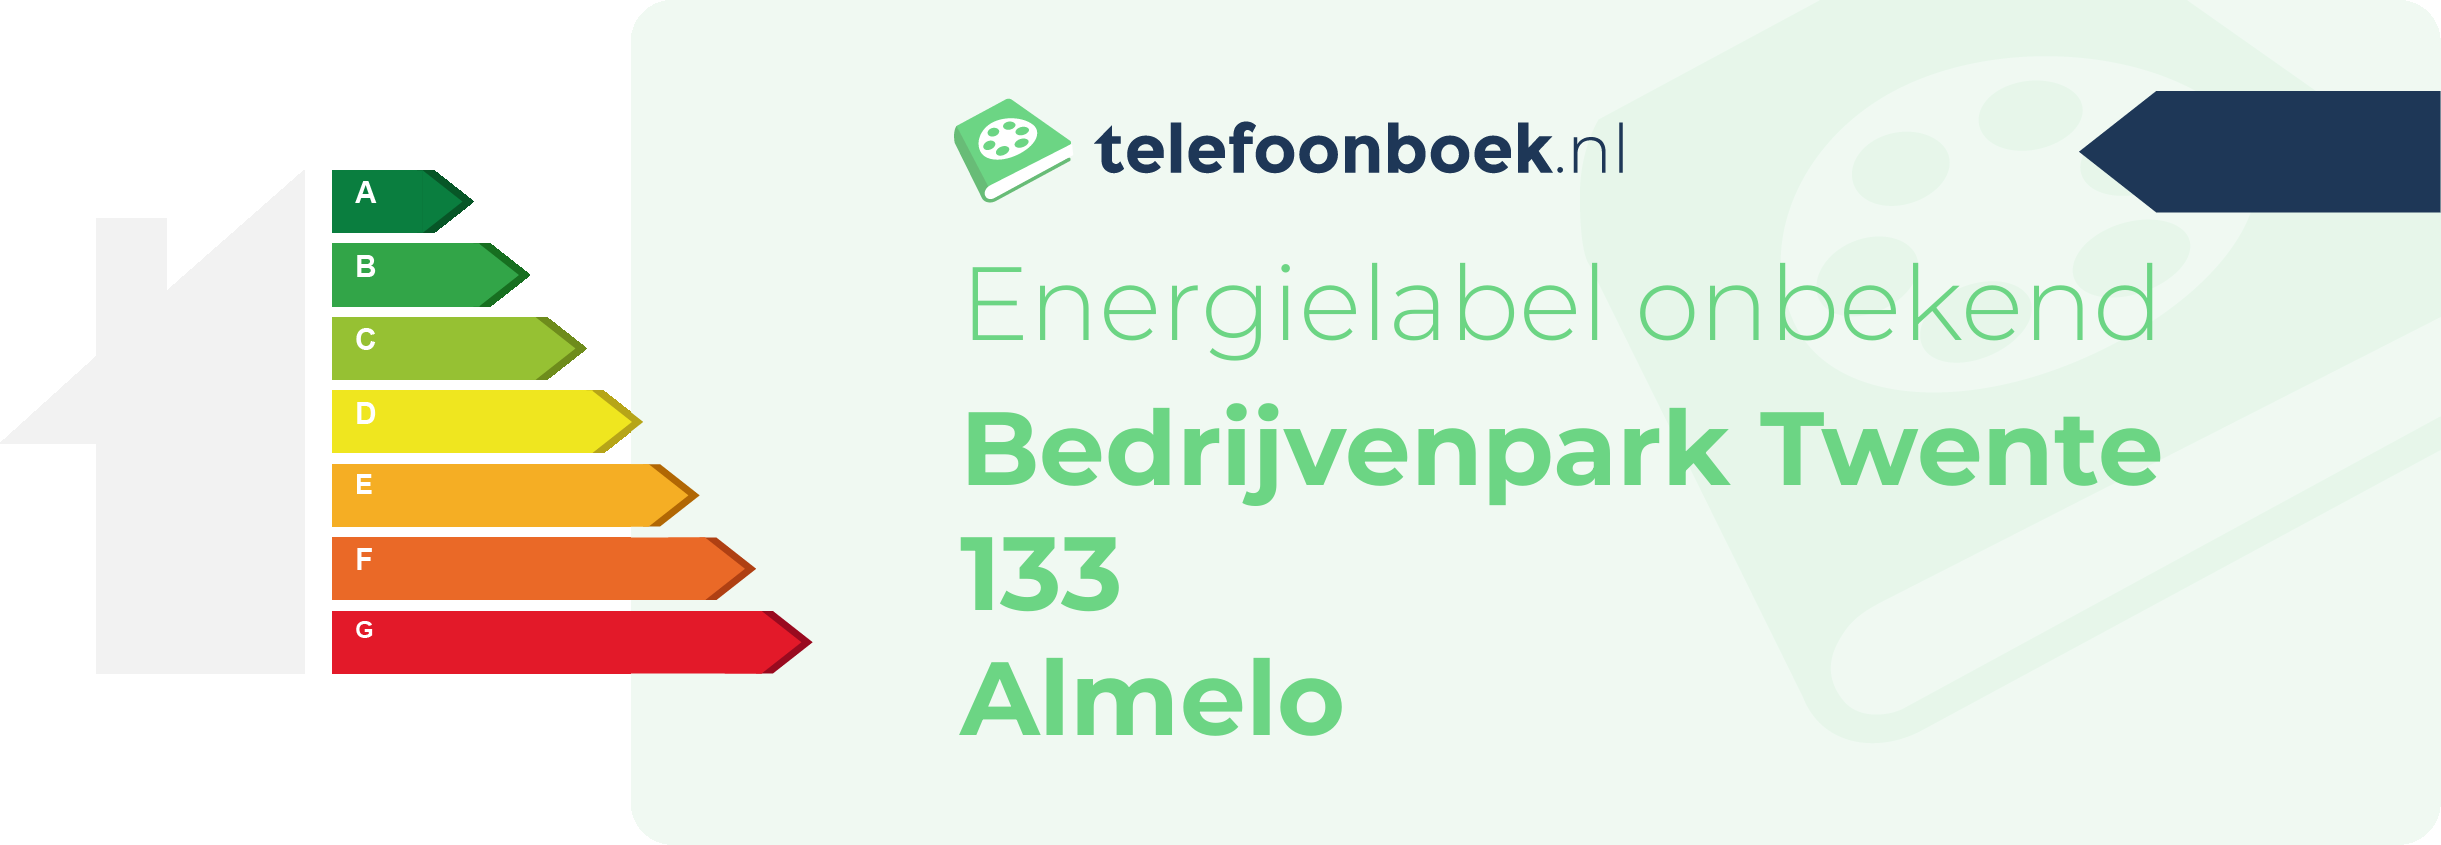 Energielabel Bedrijvenpark Twente 133 Almelo